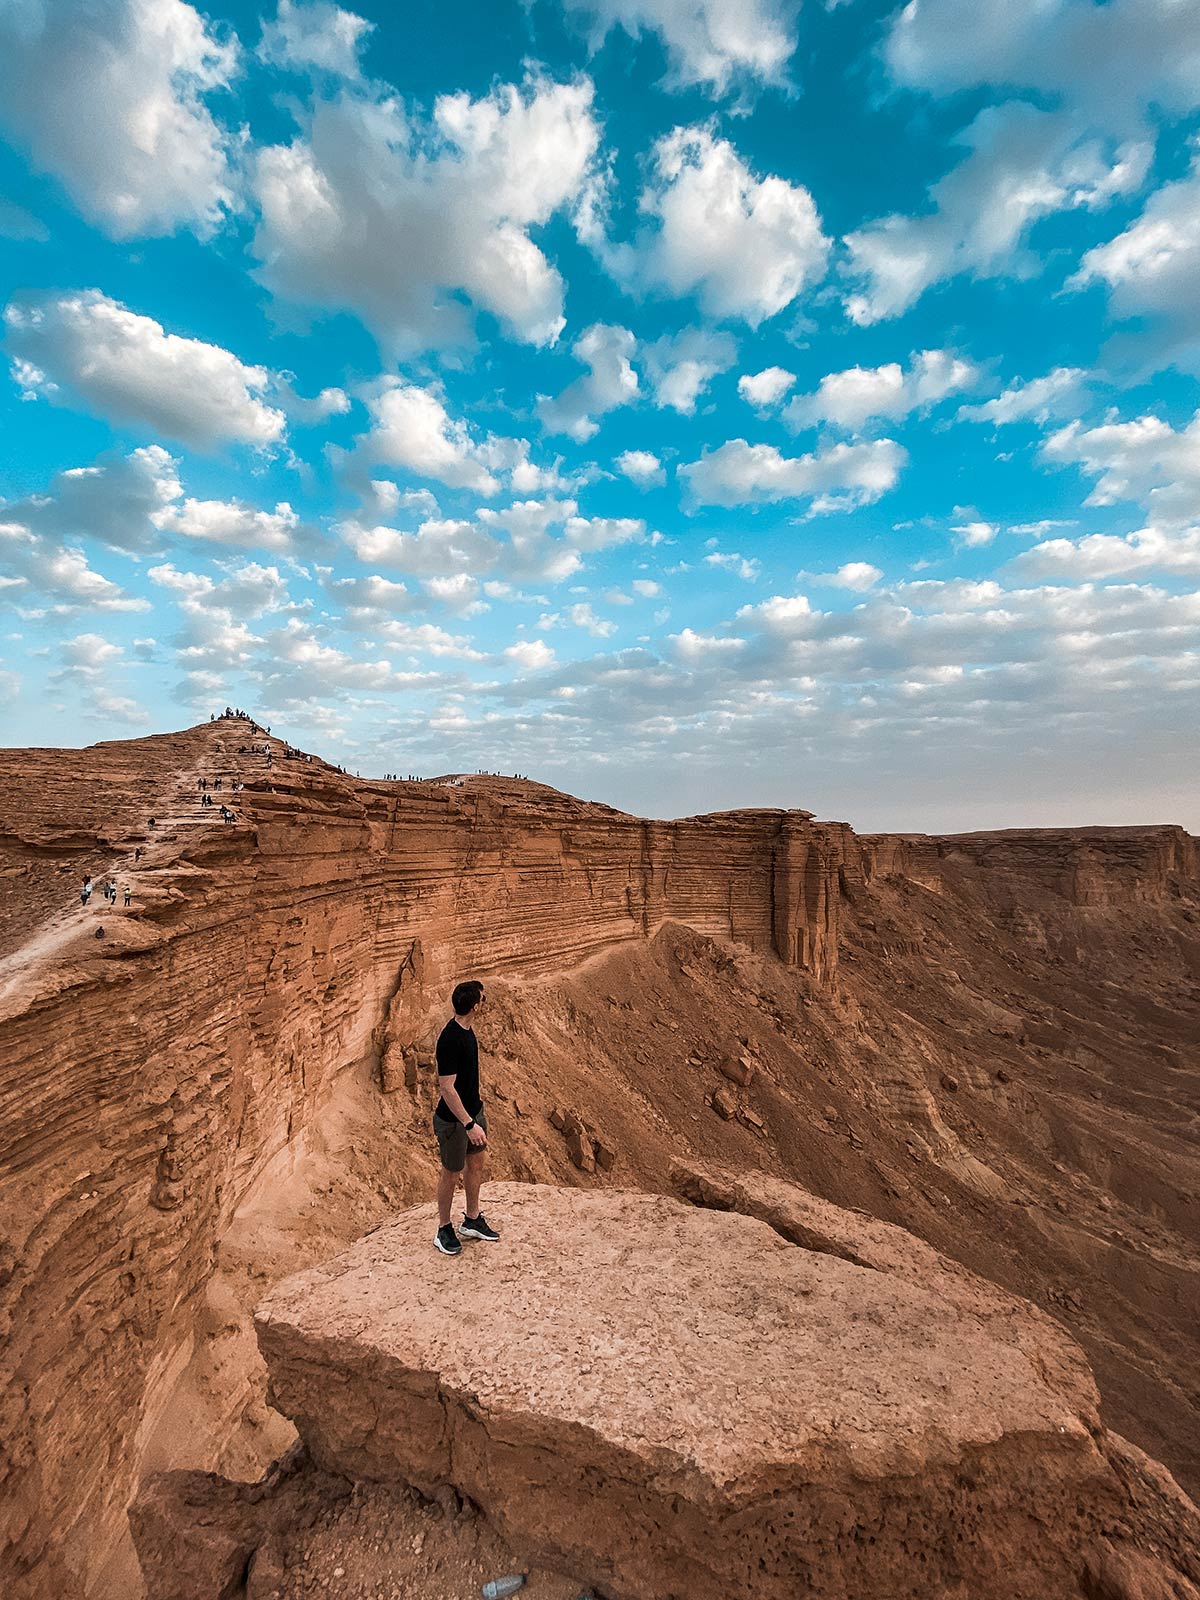 David Simpson in amphitheater in Saudi Arabia. A trip to the edge of the world